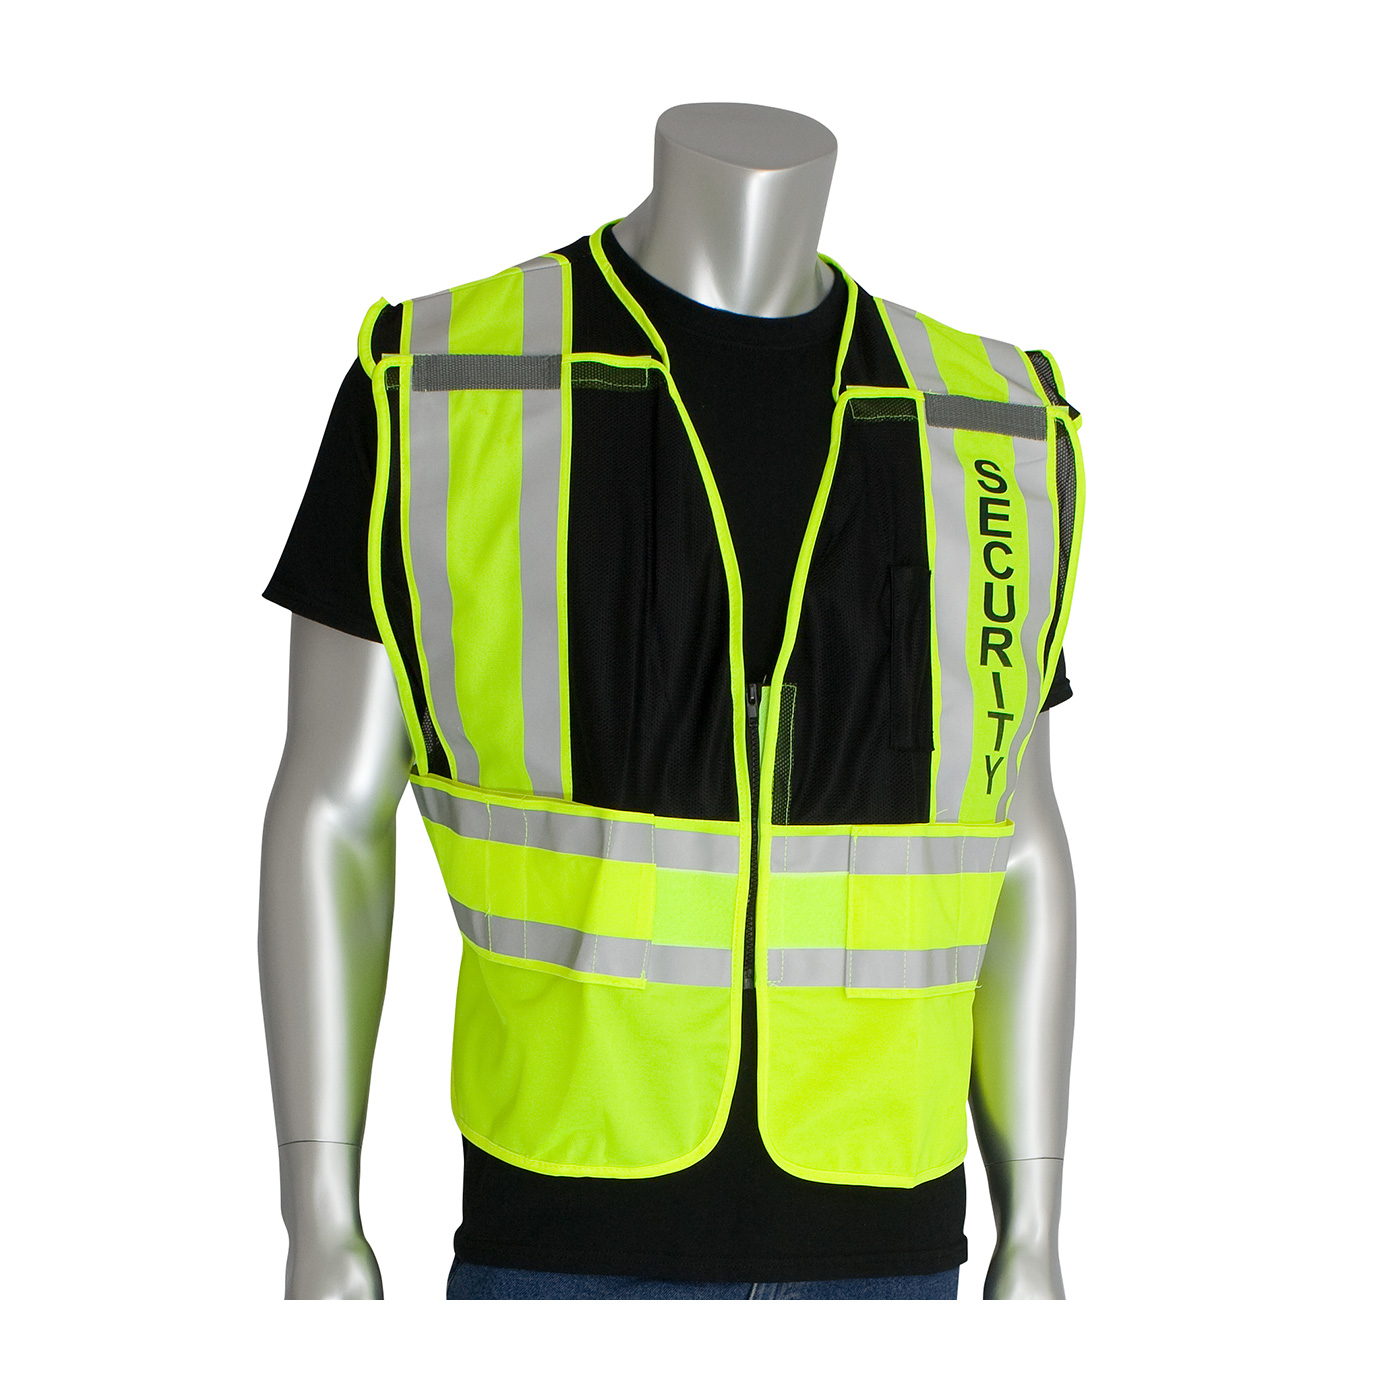 PIP® ANSI Type P Class 2 Public Safety Vest with SECURITY Logo #302-PSV-BLK